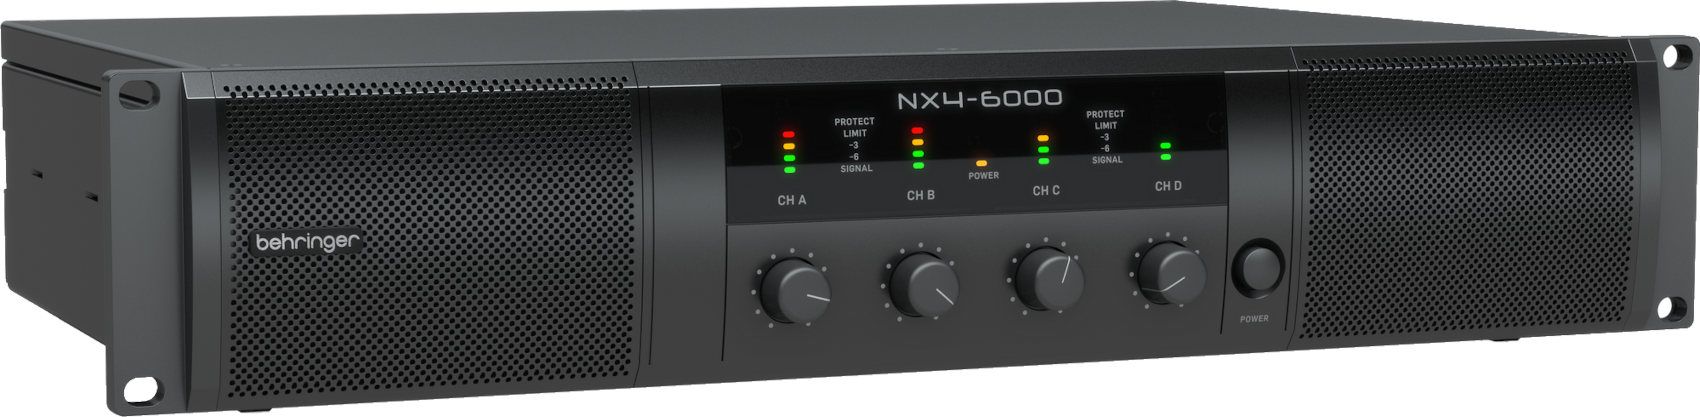 Behringer NX4-6000 - фото 2